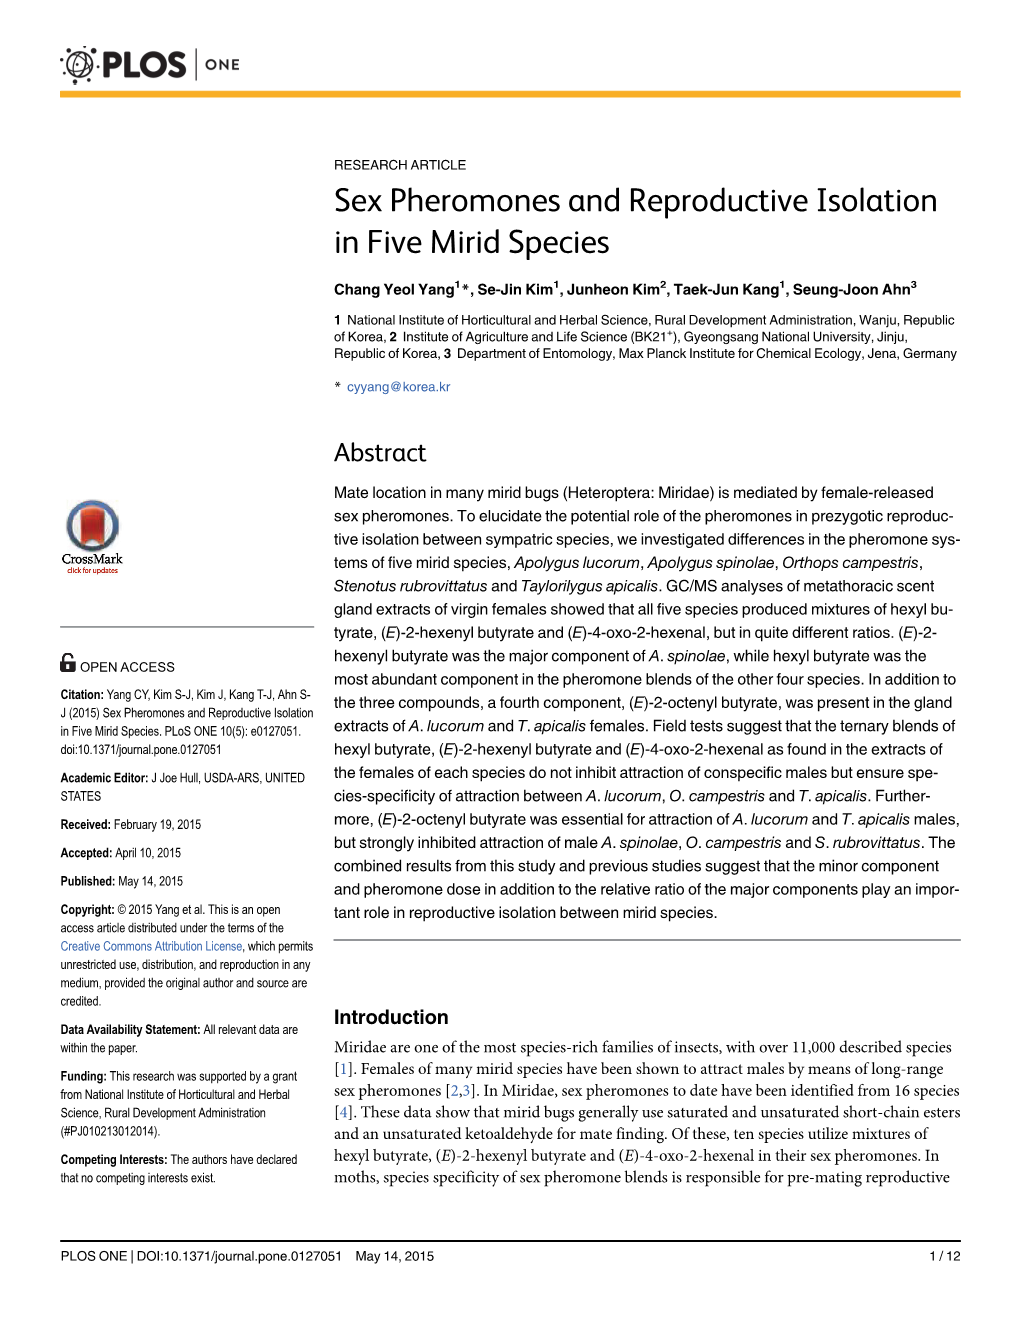 Sex Pheromones and Reproductive Isolation in Five Mirid Species